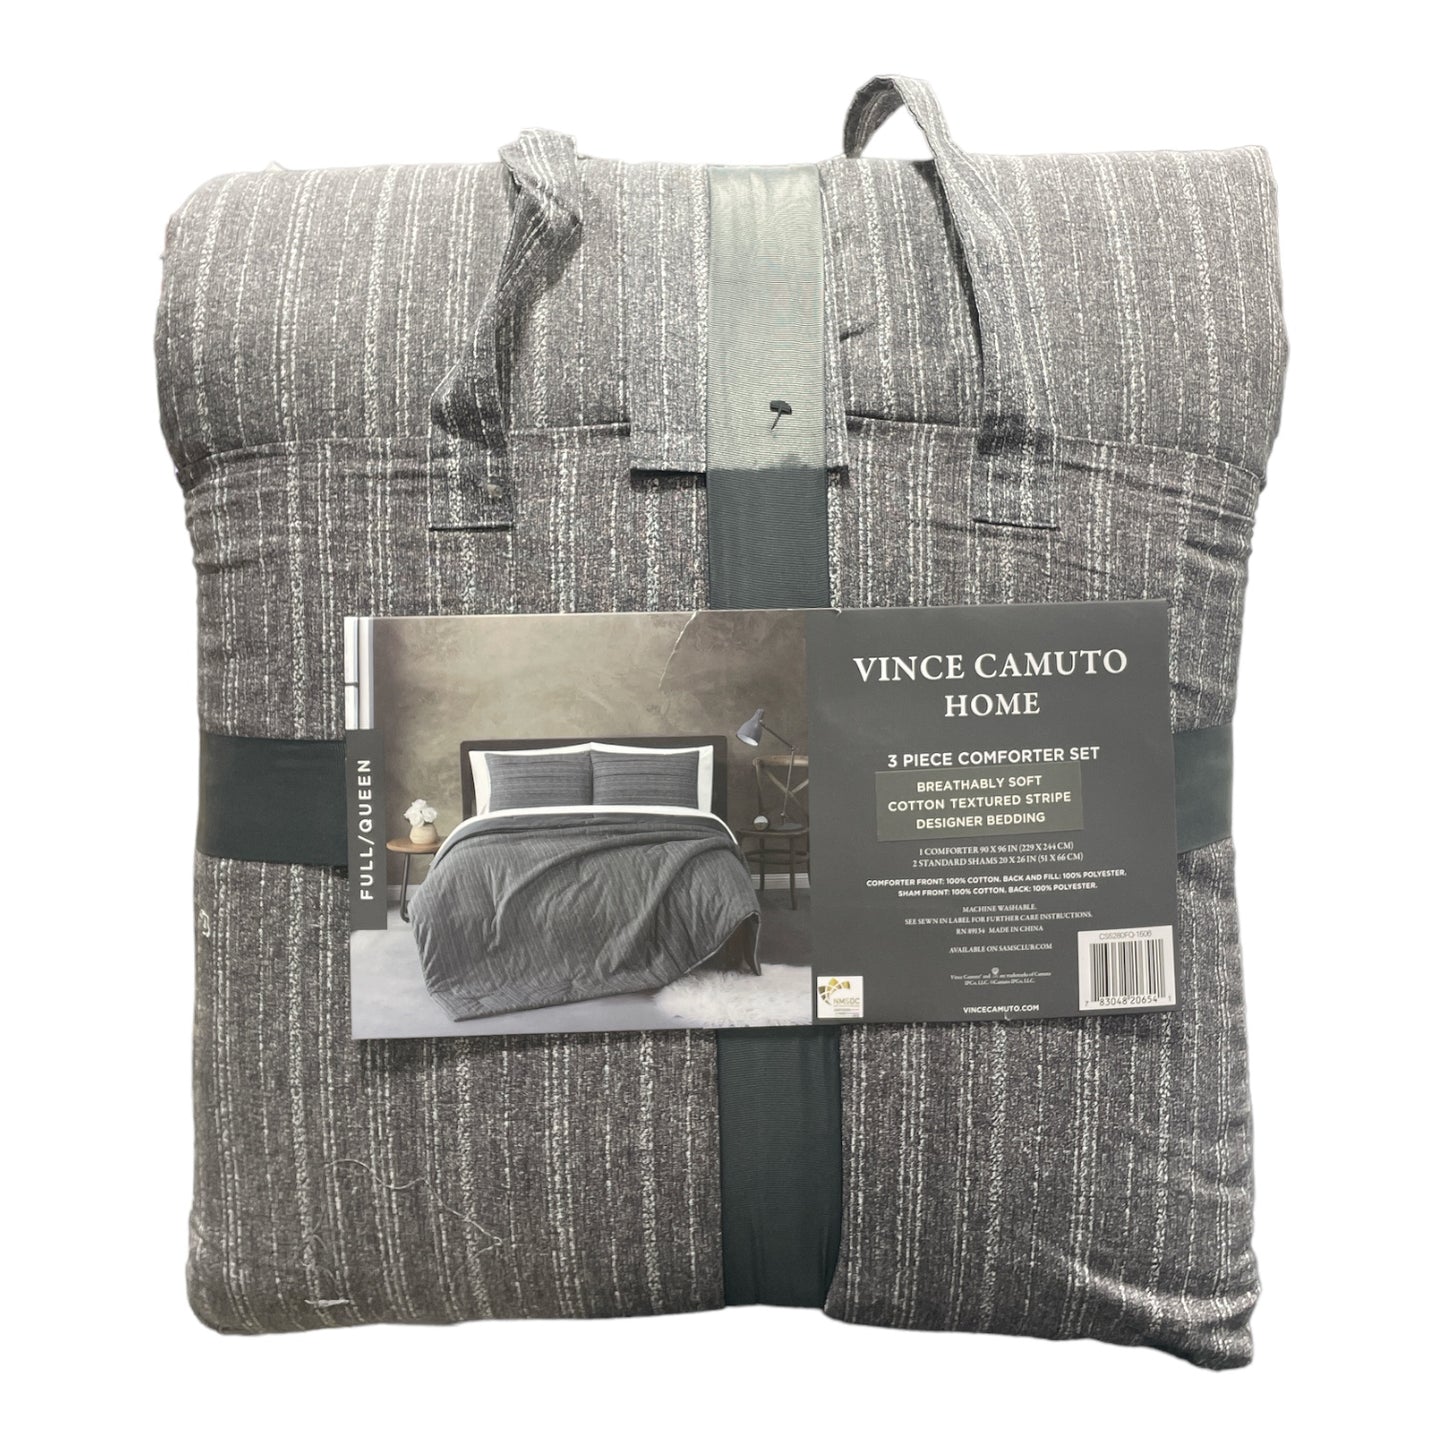 Vince Camuto Home Cotton Textured Stripe Designer 3 Pc Comforter Set, Full/Queen